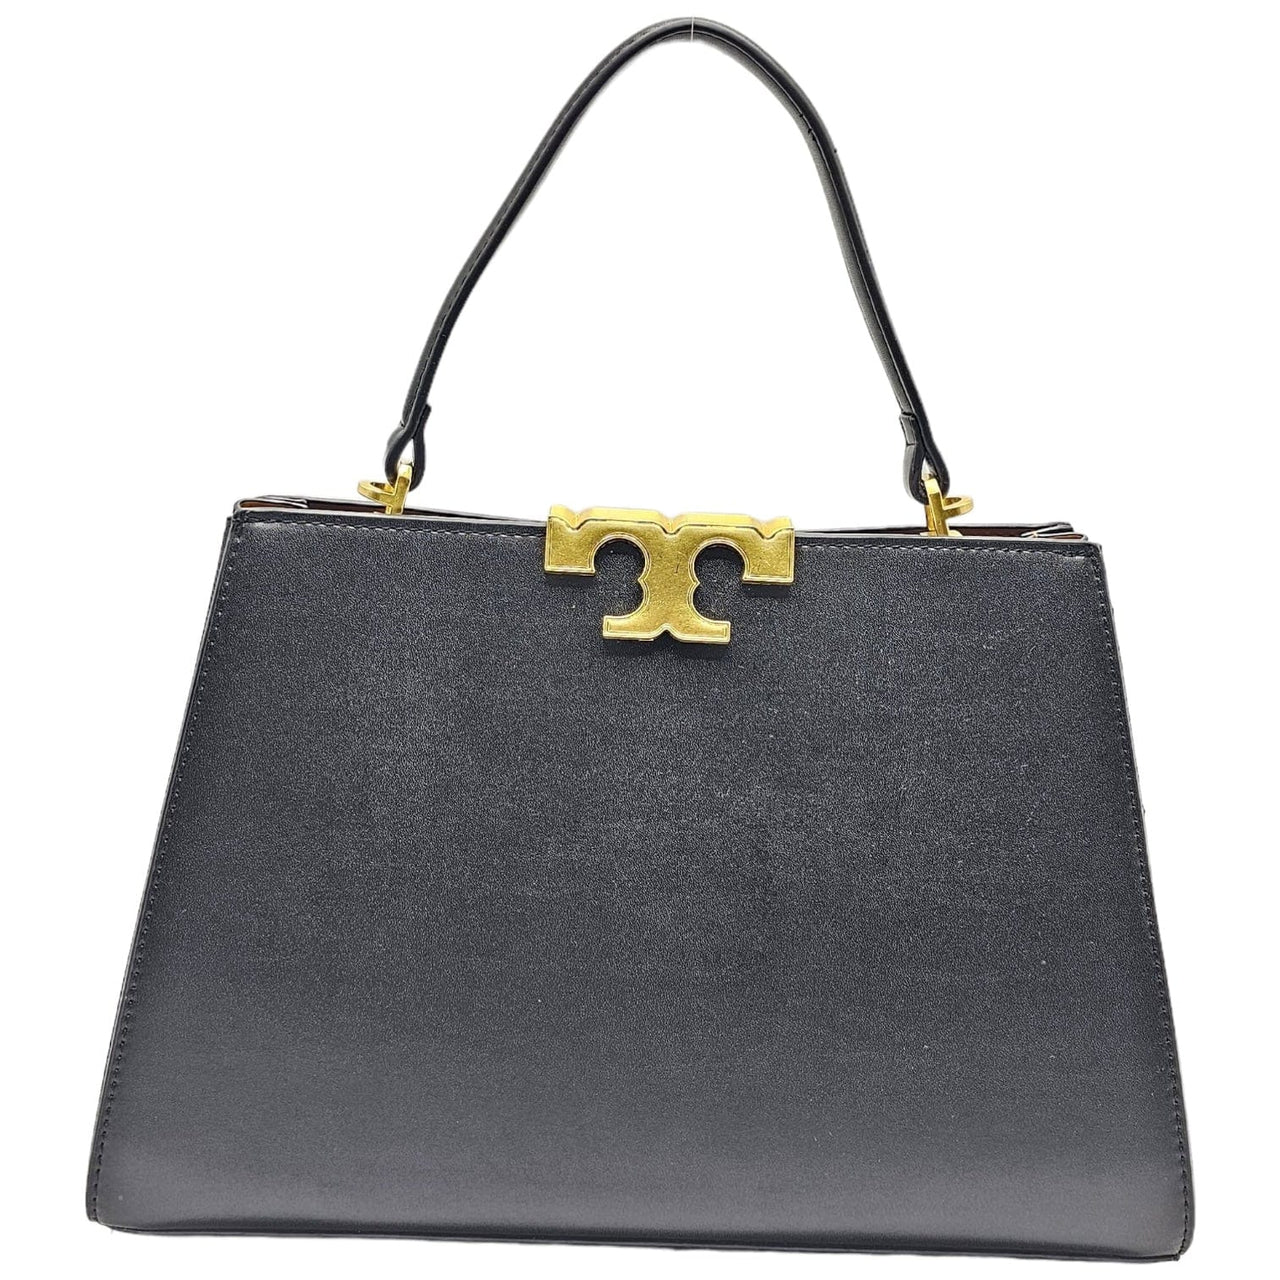 The Bag Couture Handbags, Wallets & Cases Tory Burch Eleanor Satchel Handbag Black